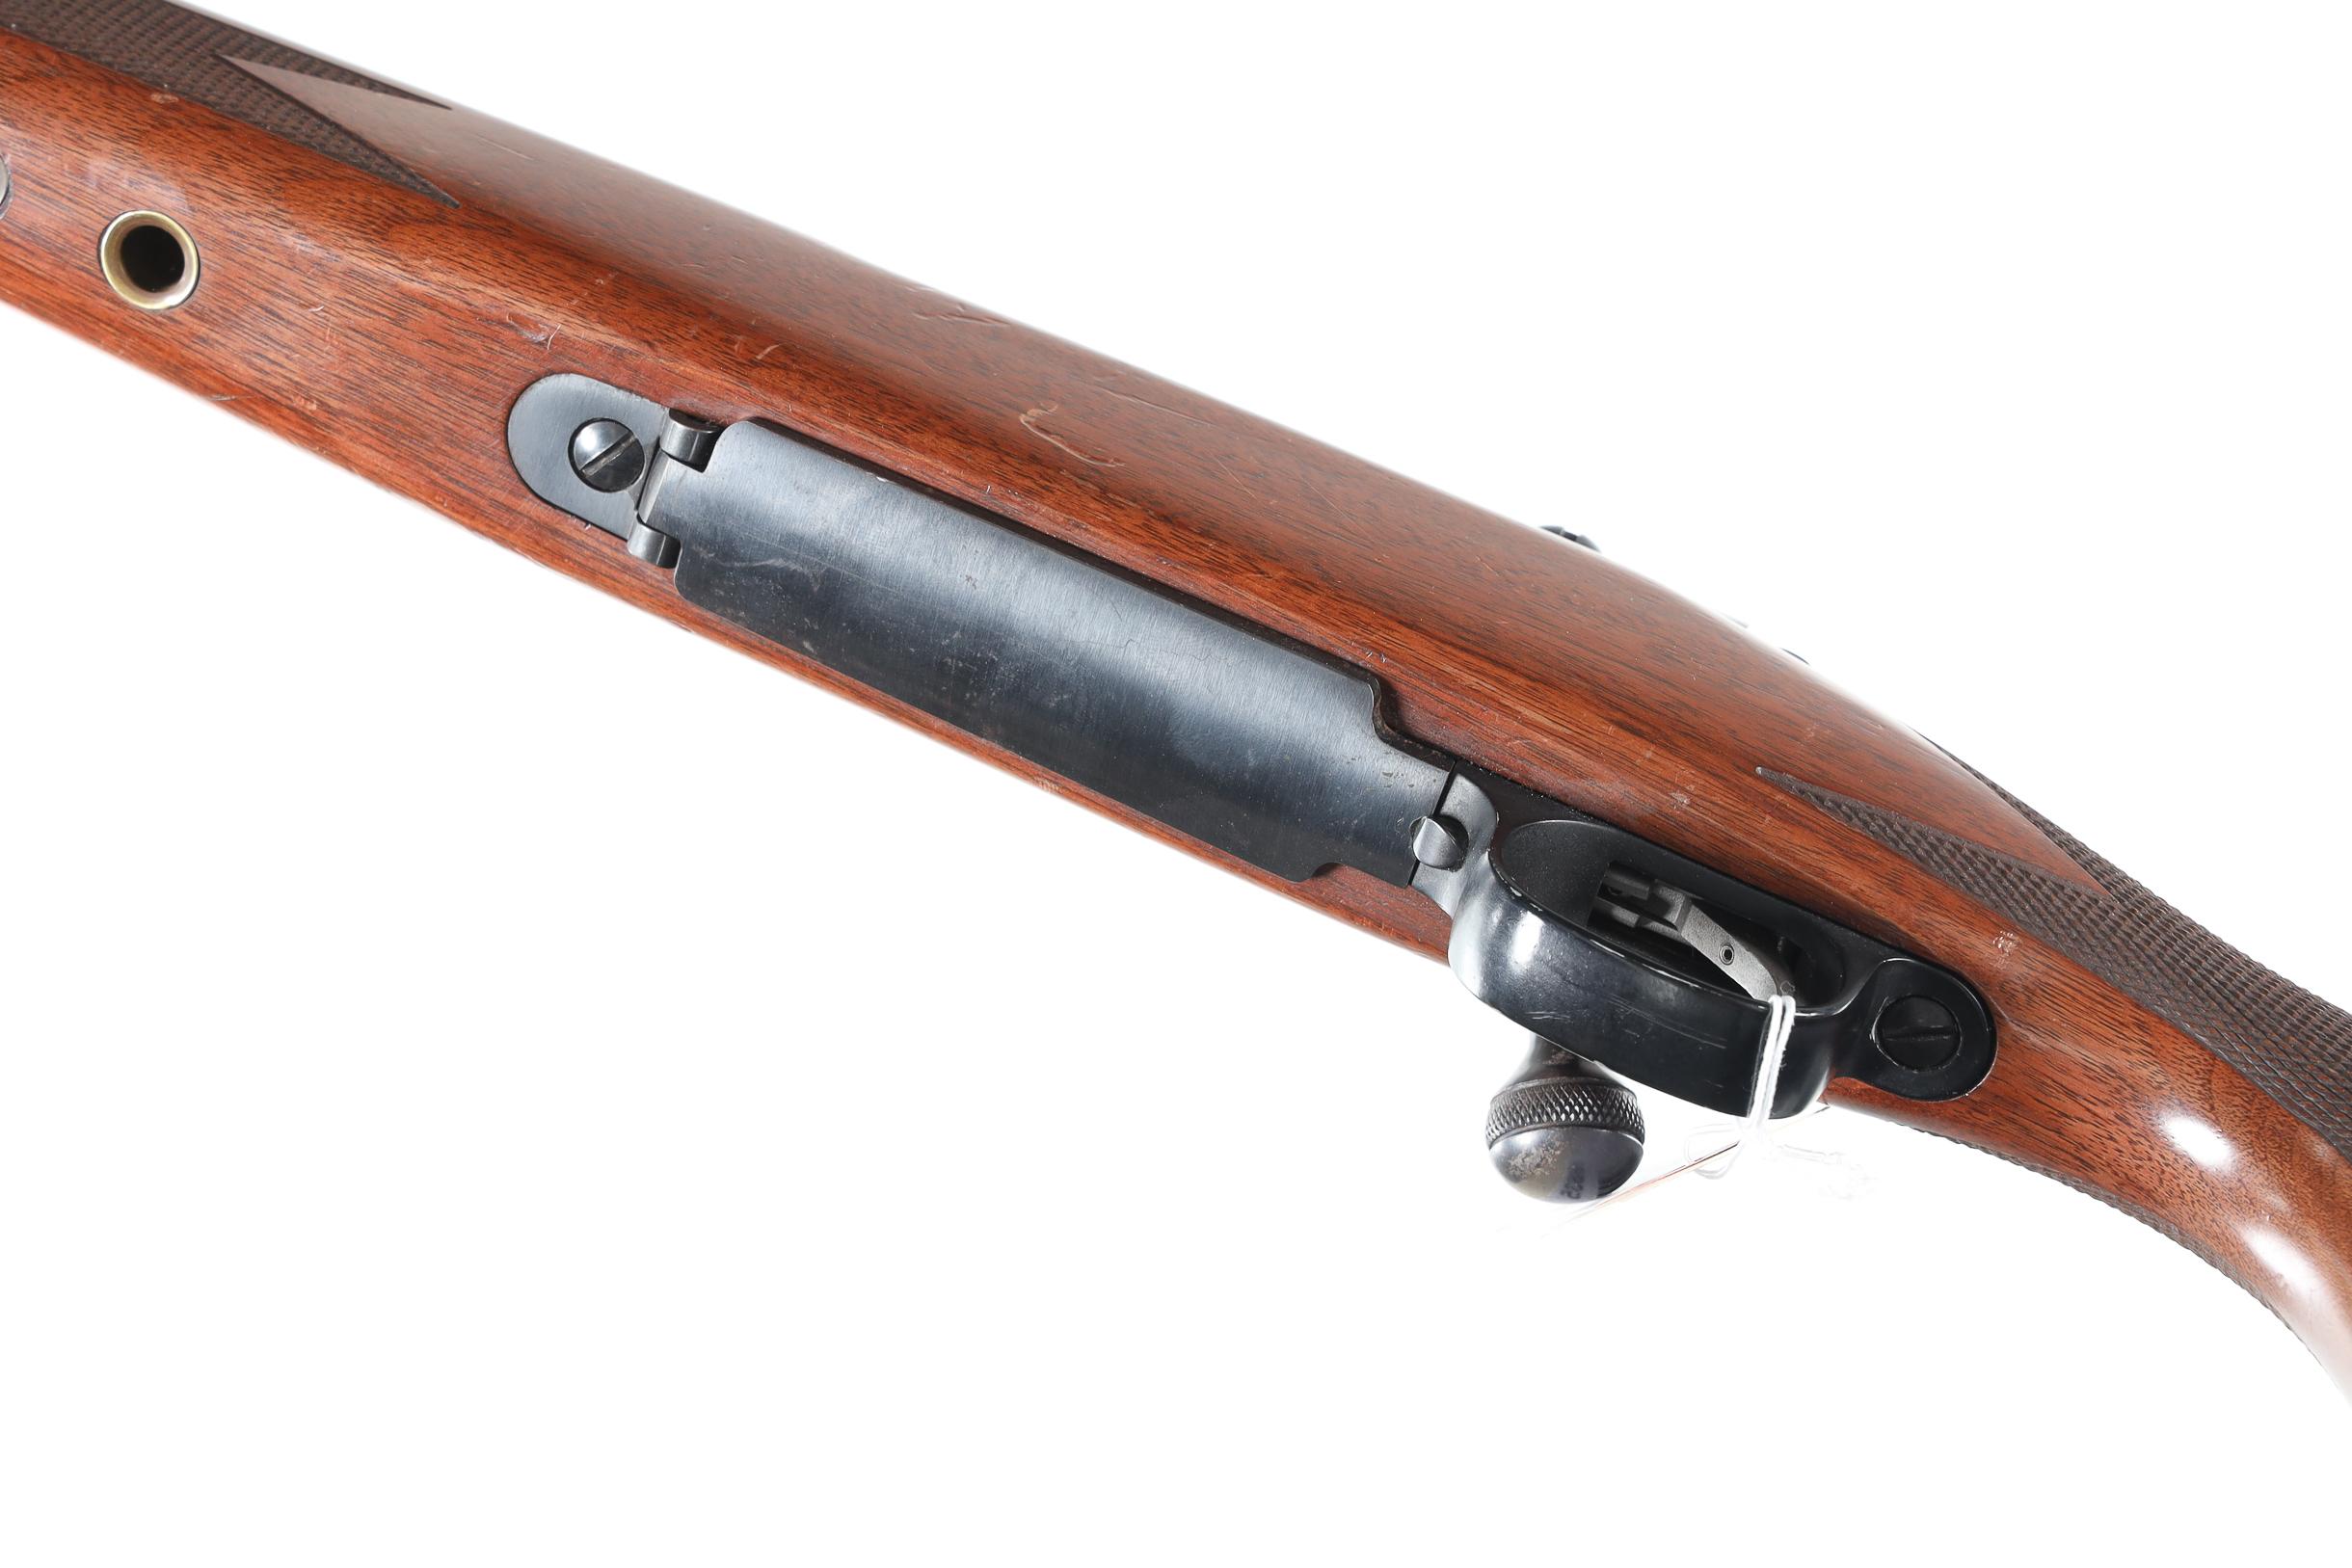 Winchester 70 Carbine Short Action Bolt Rifle .222 rem